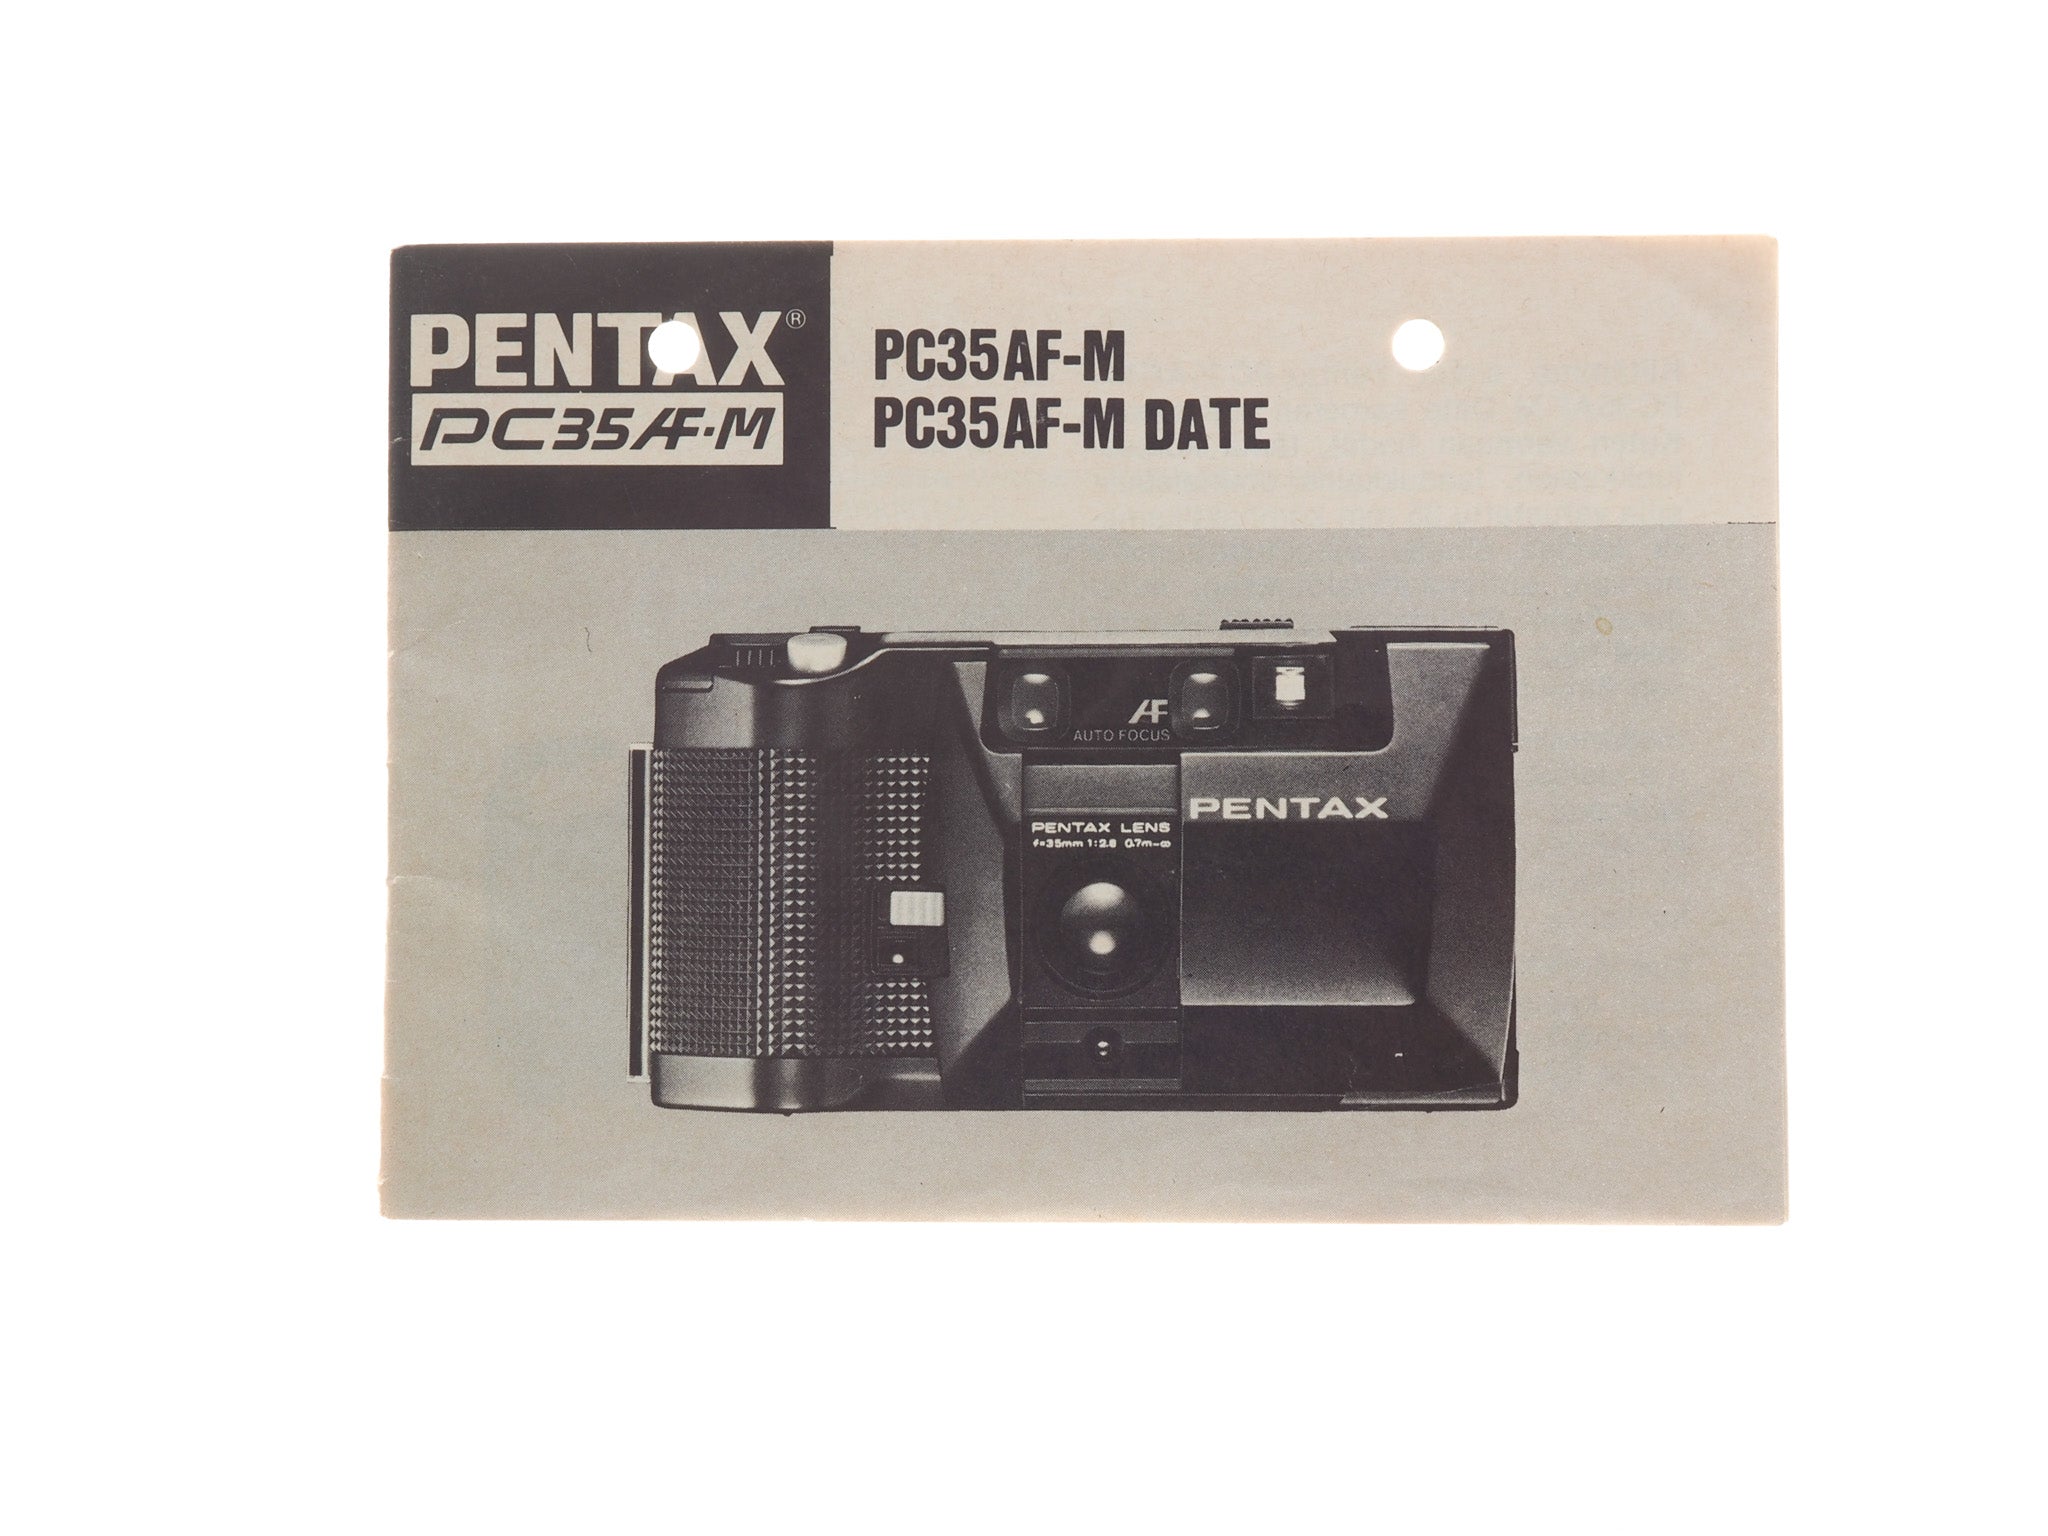 Pentax PC35AF-M (Date) Instructions